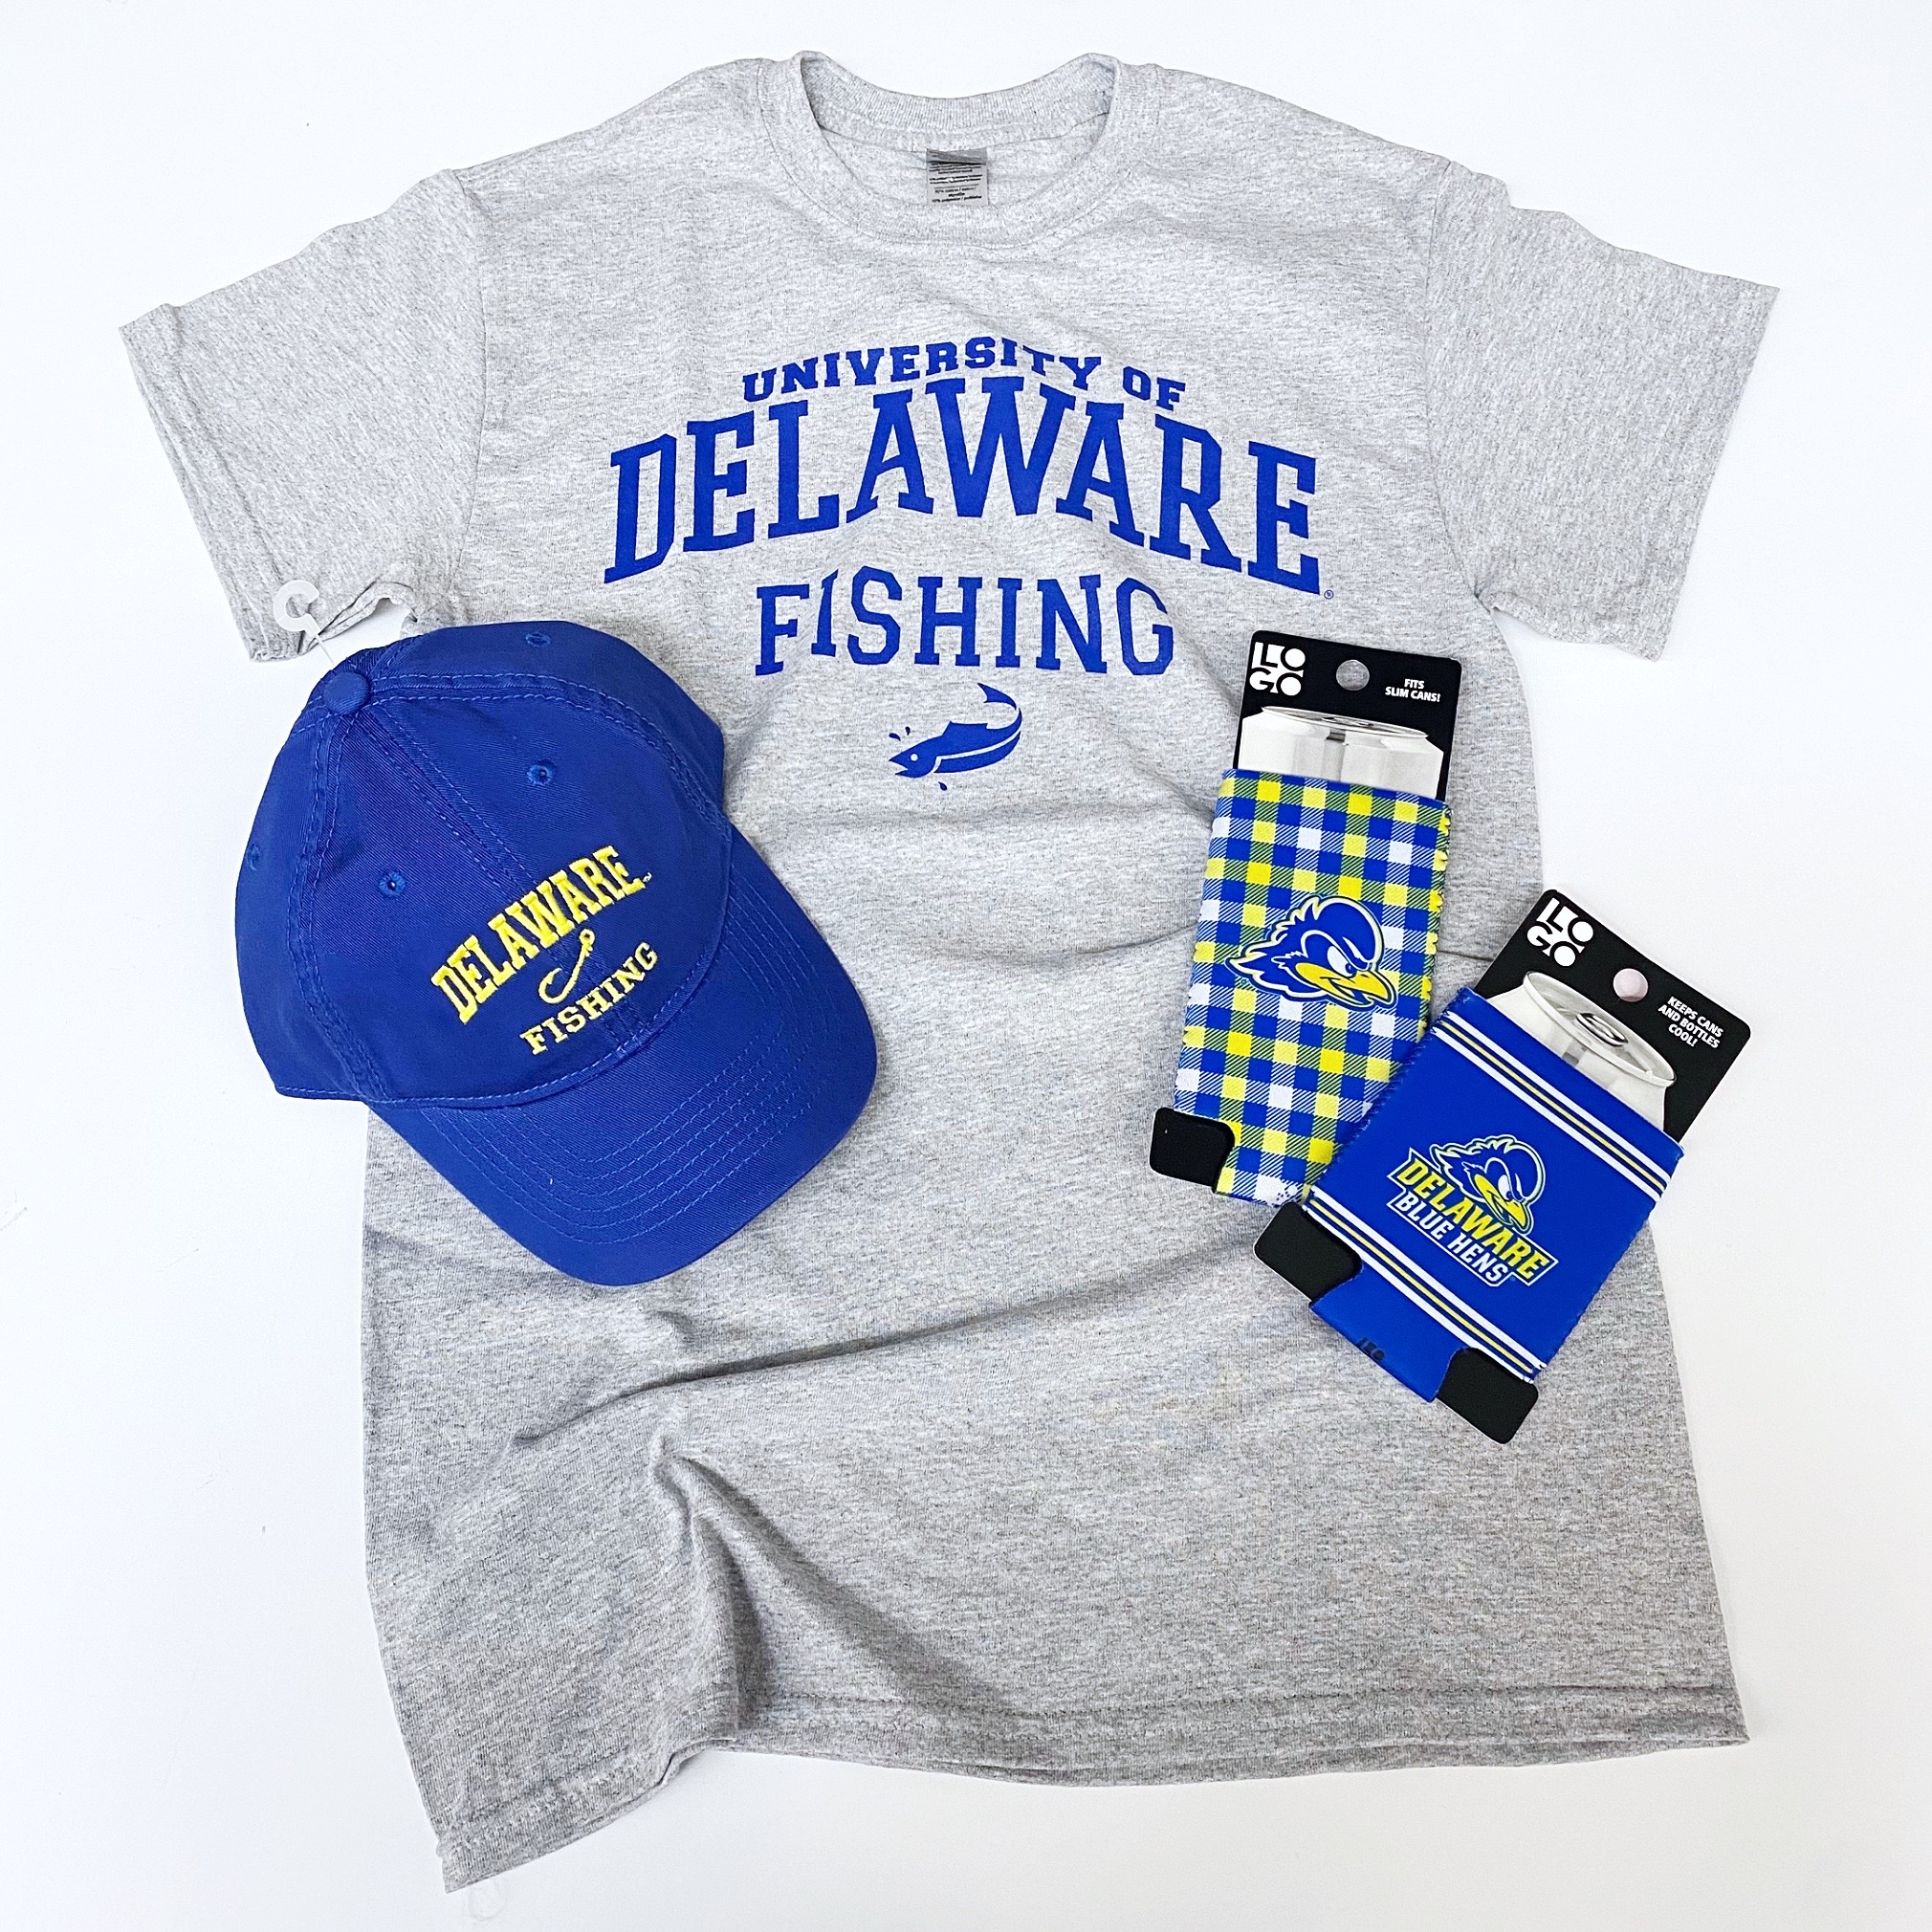 https://www.national5and10.com/wp-content/uploads/2022/02/University-of-Delaware-Fishing-T-shirt-Oxford.jpg